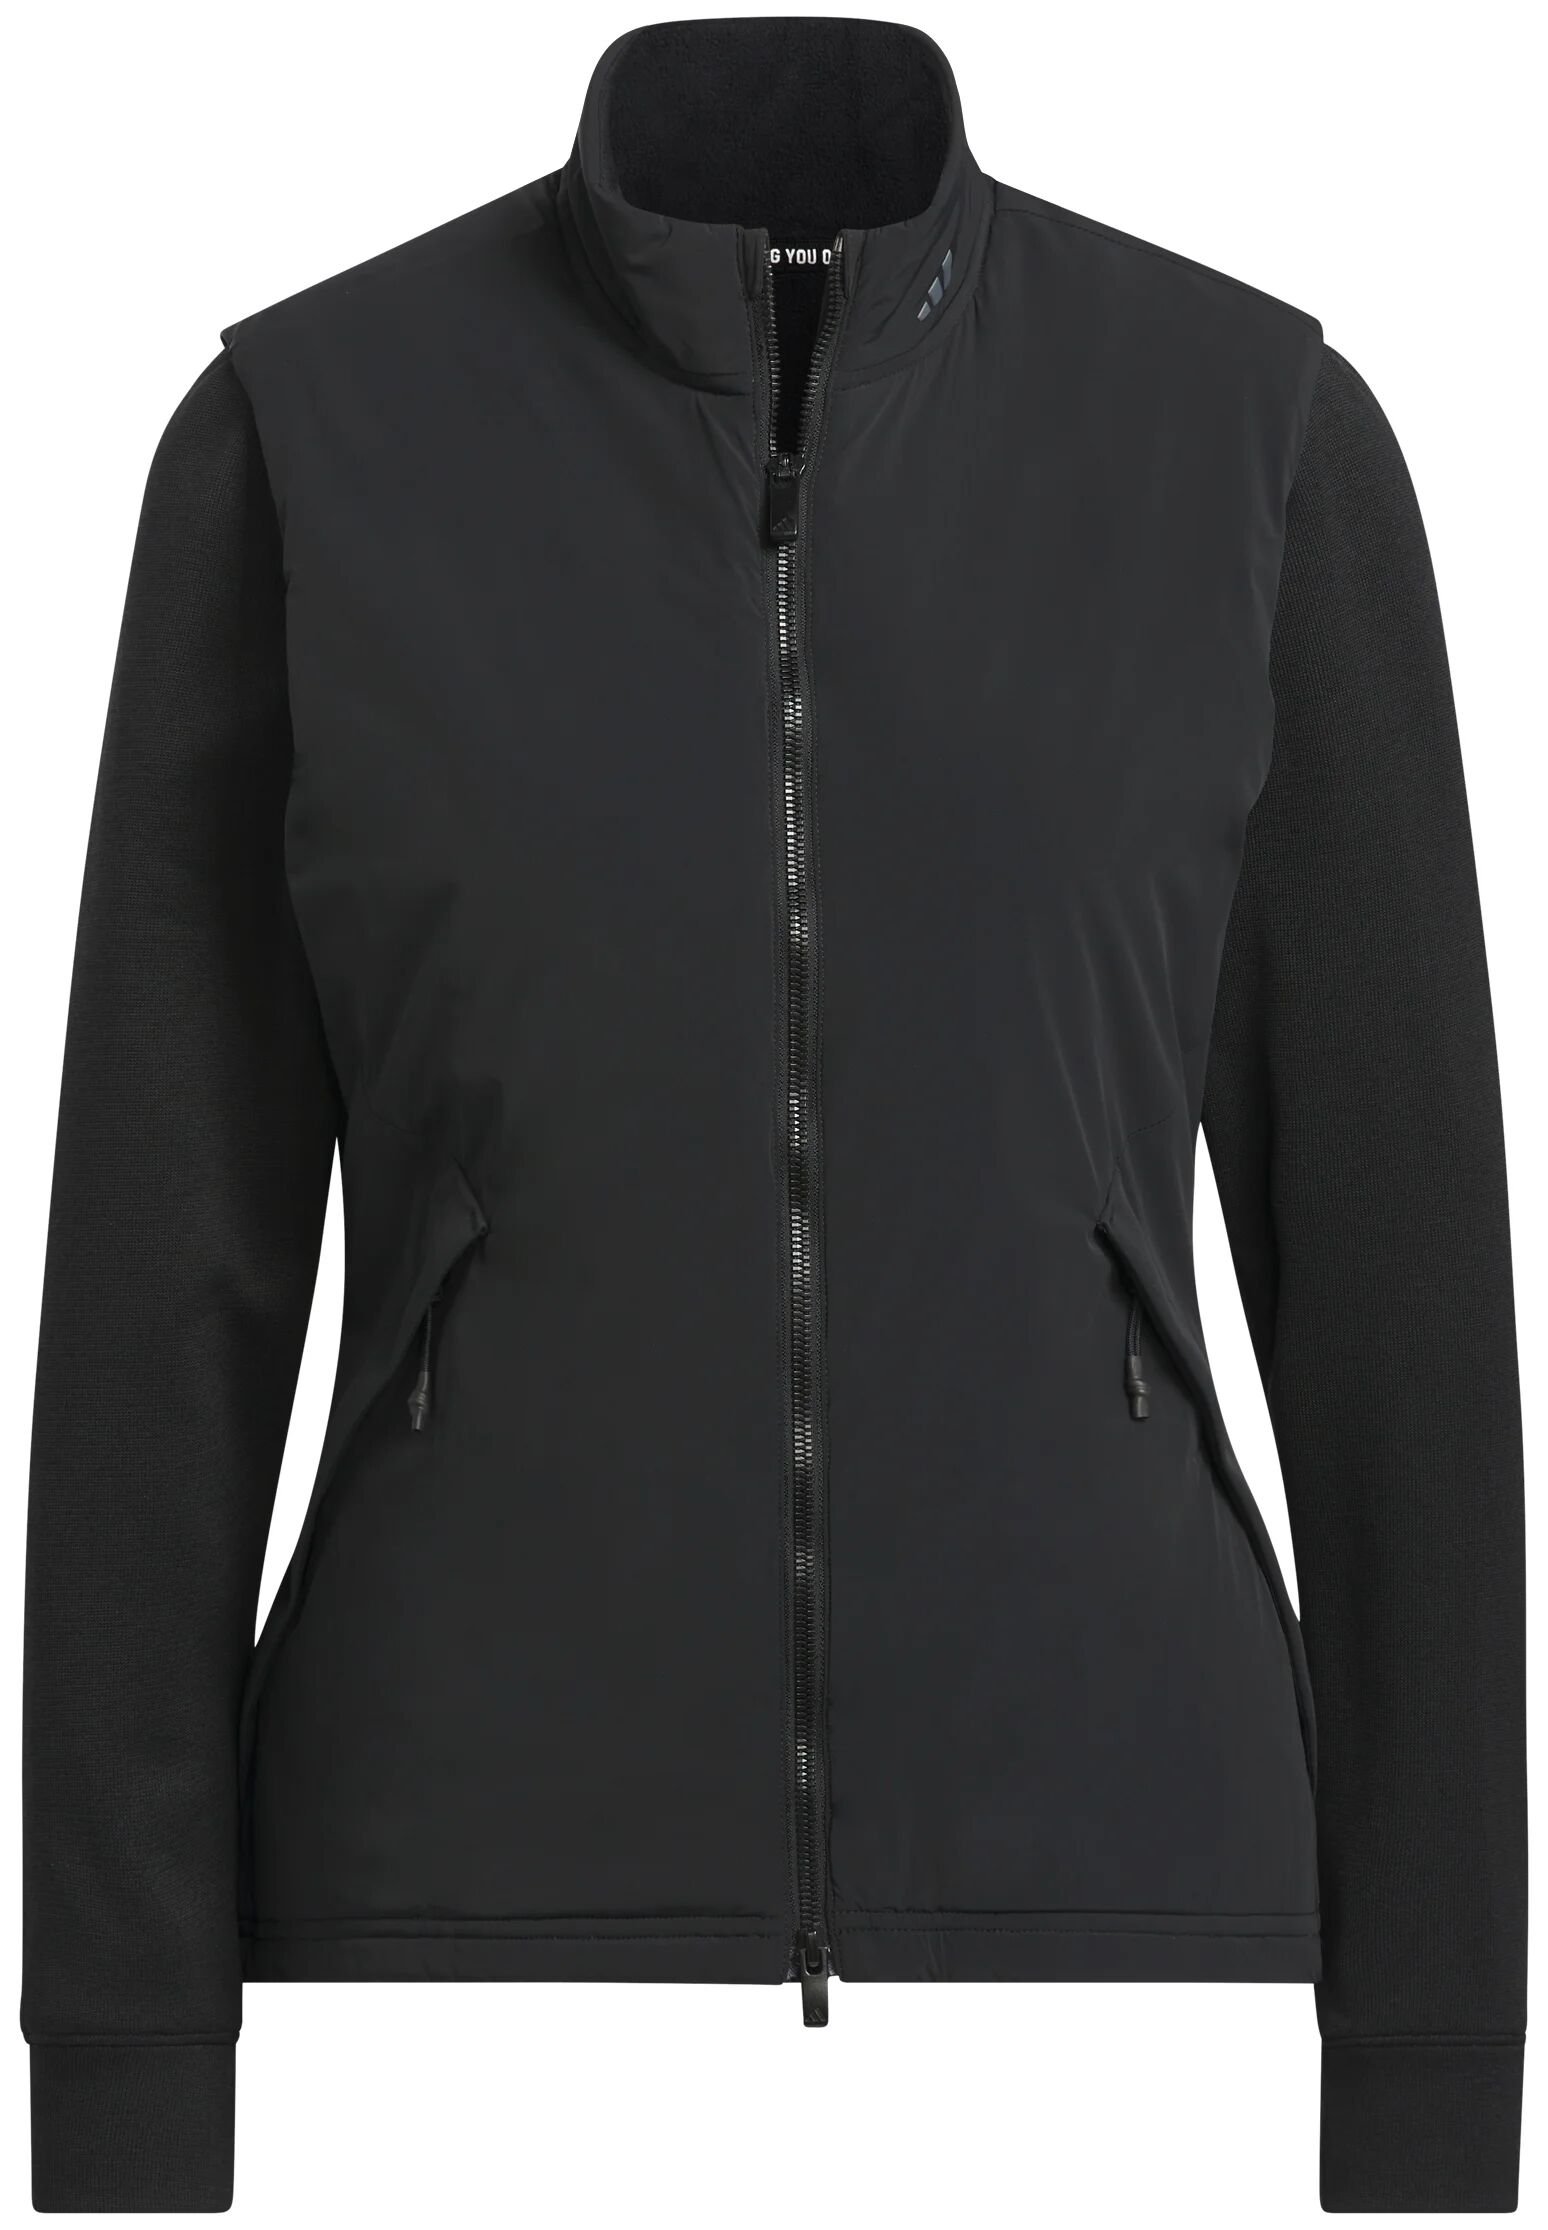 adidas Womens Ultimate365 Tour Frostguard Golf Jacket - Black, Size: Large